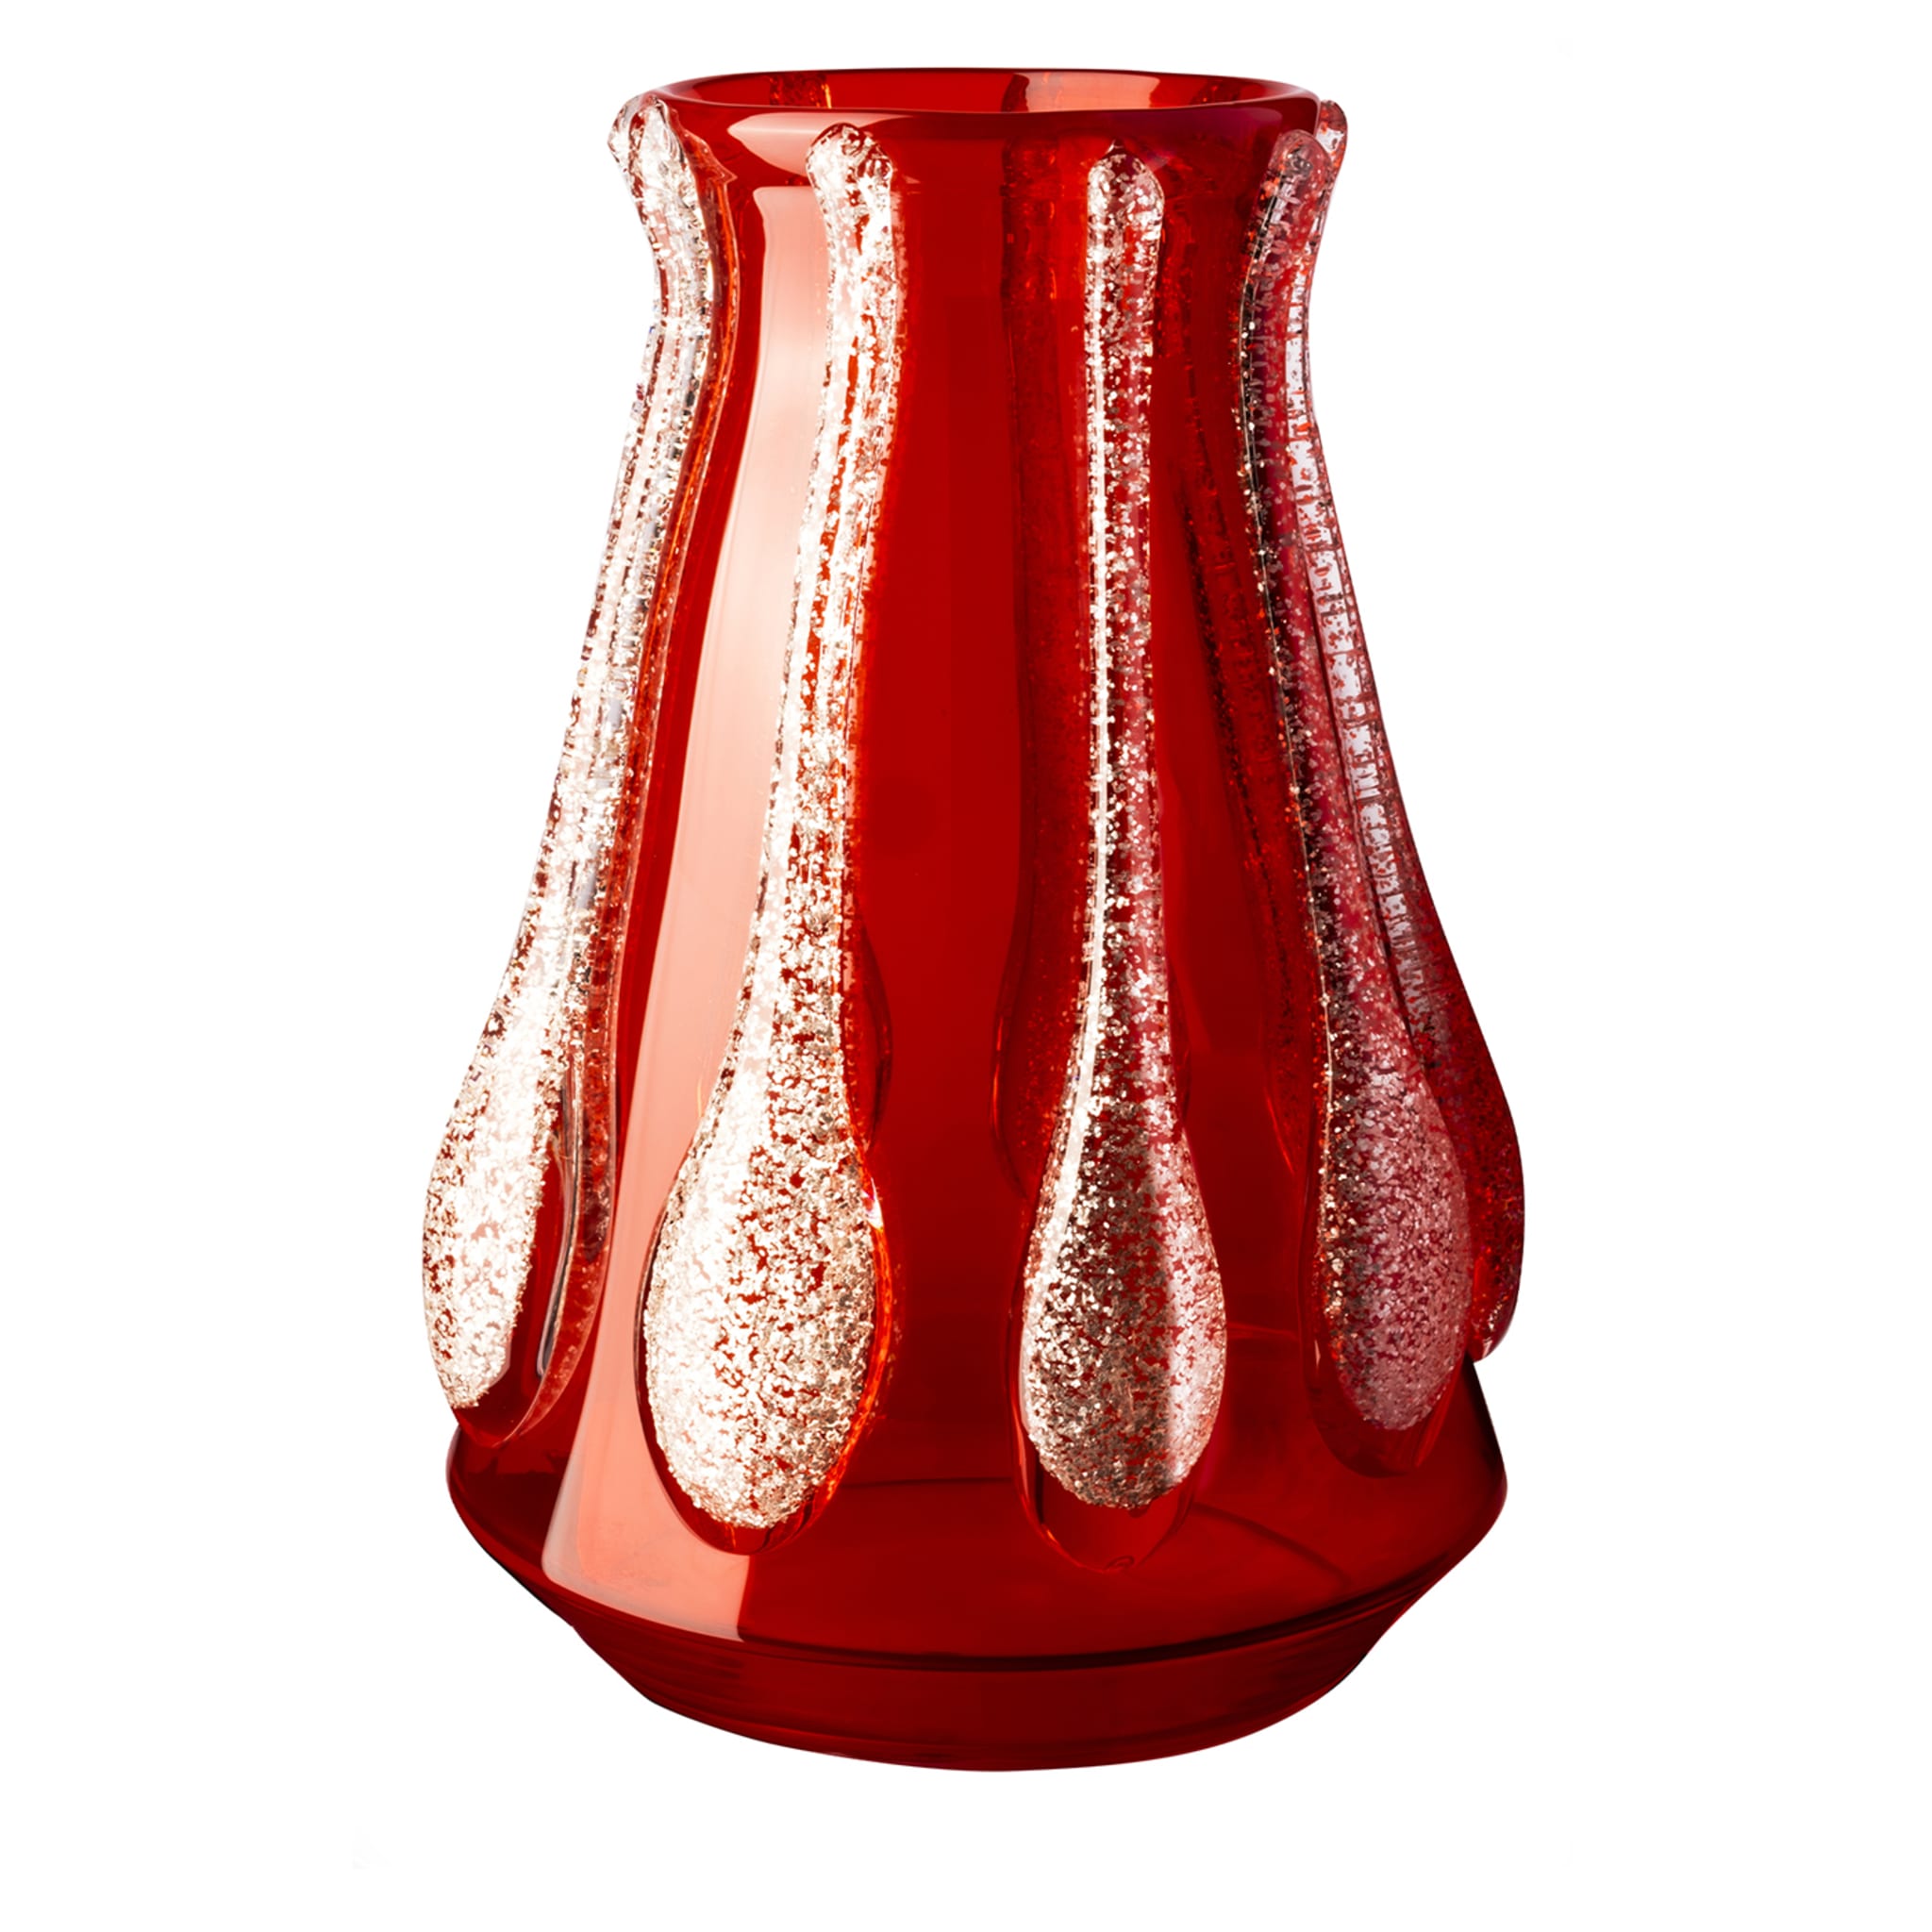 Colate Glittery Red Vase by Carlo Moretti - Main view